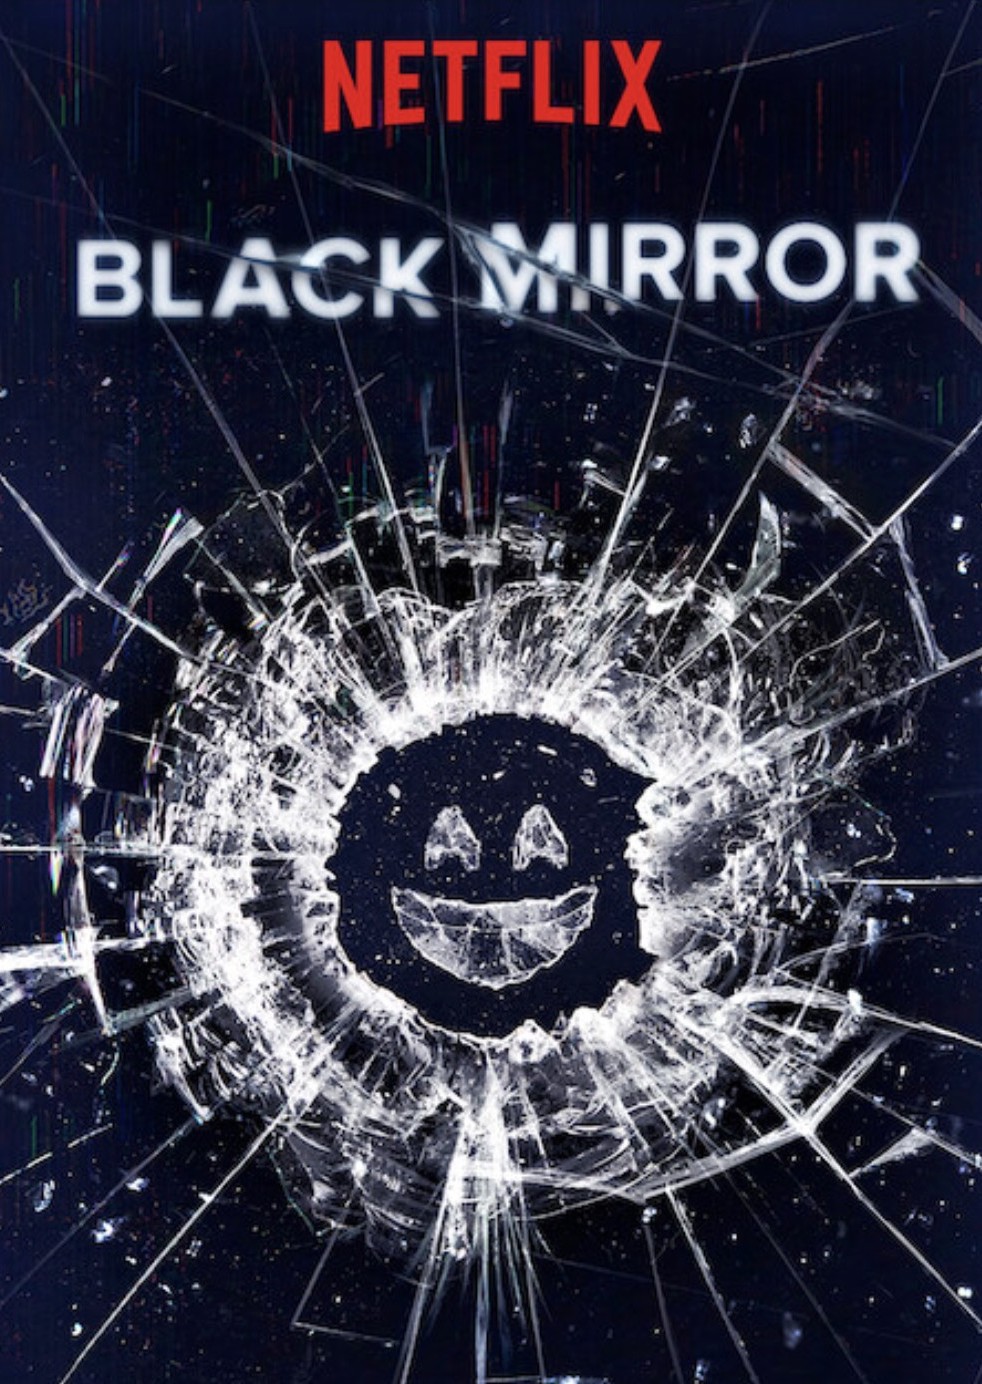 Black Mirror’s Charlie Brooker opens up on ‘most brutal’ Netflix series yet ahead of season six release